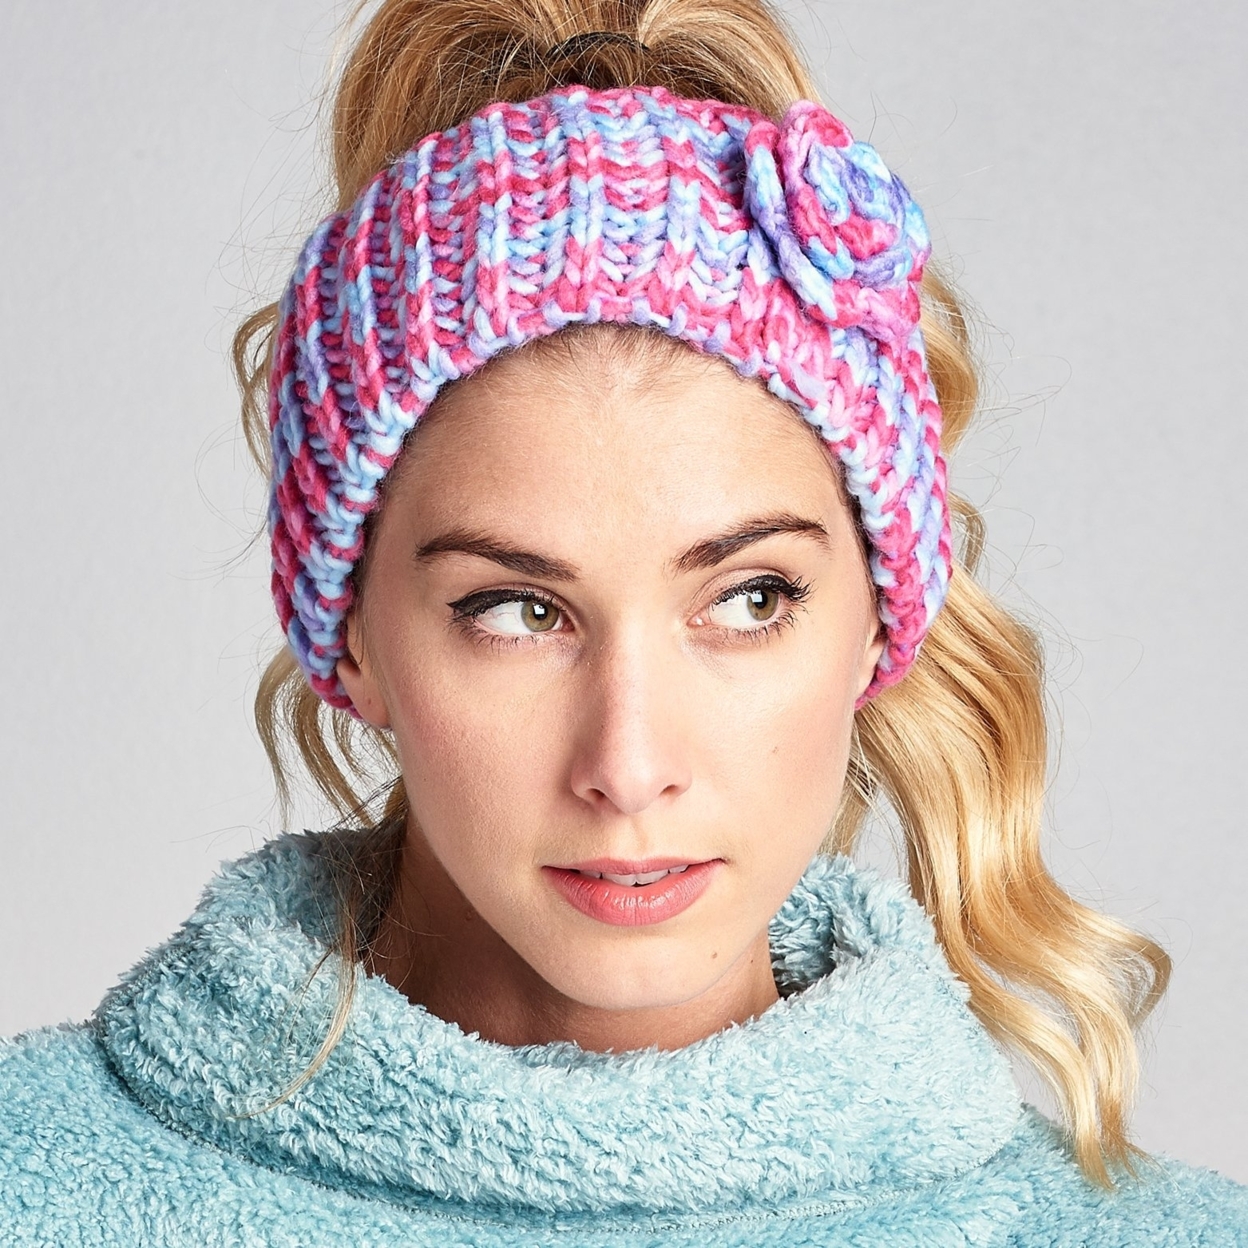 Crochet Knit Floral Headband - Black/grey